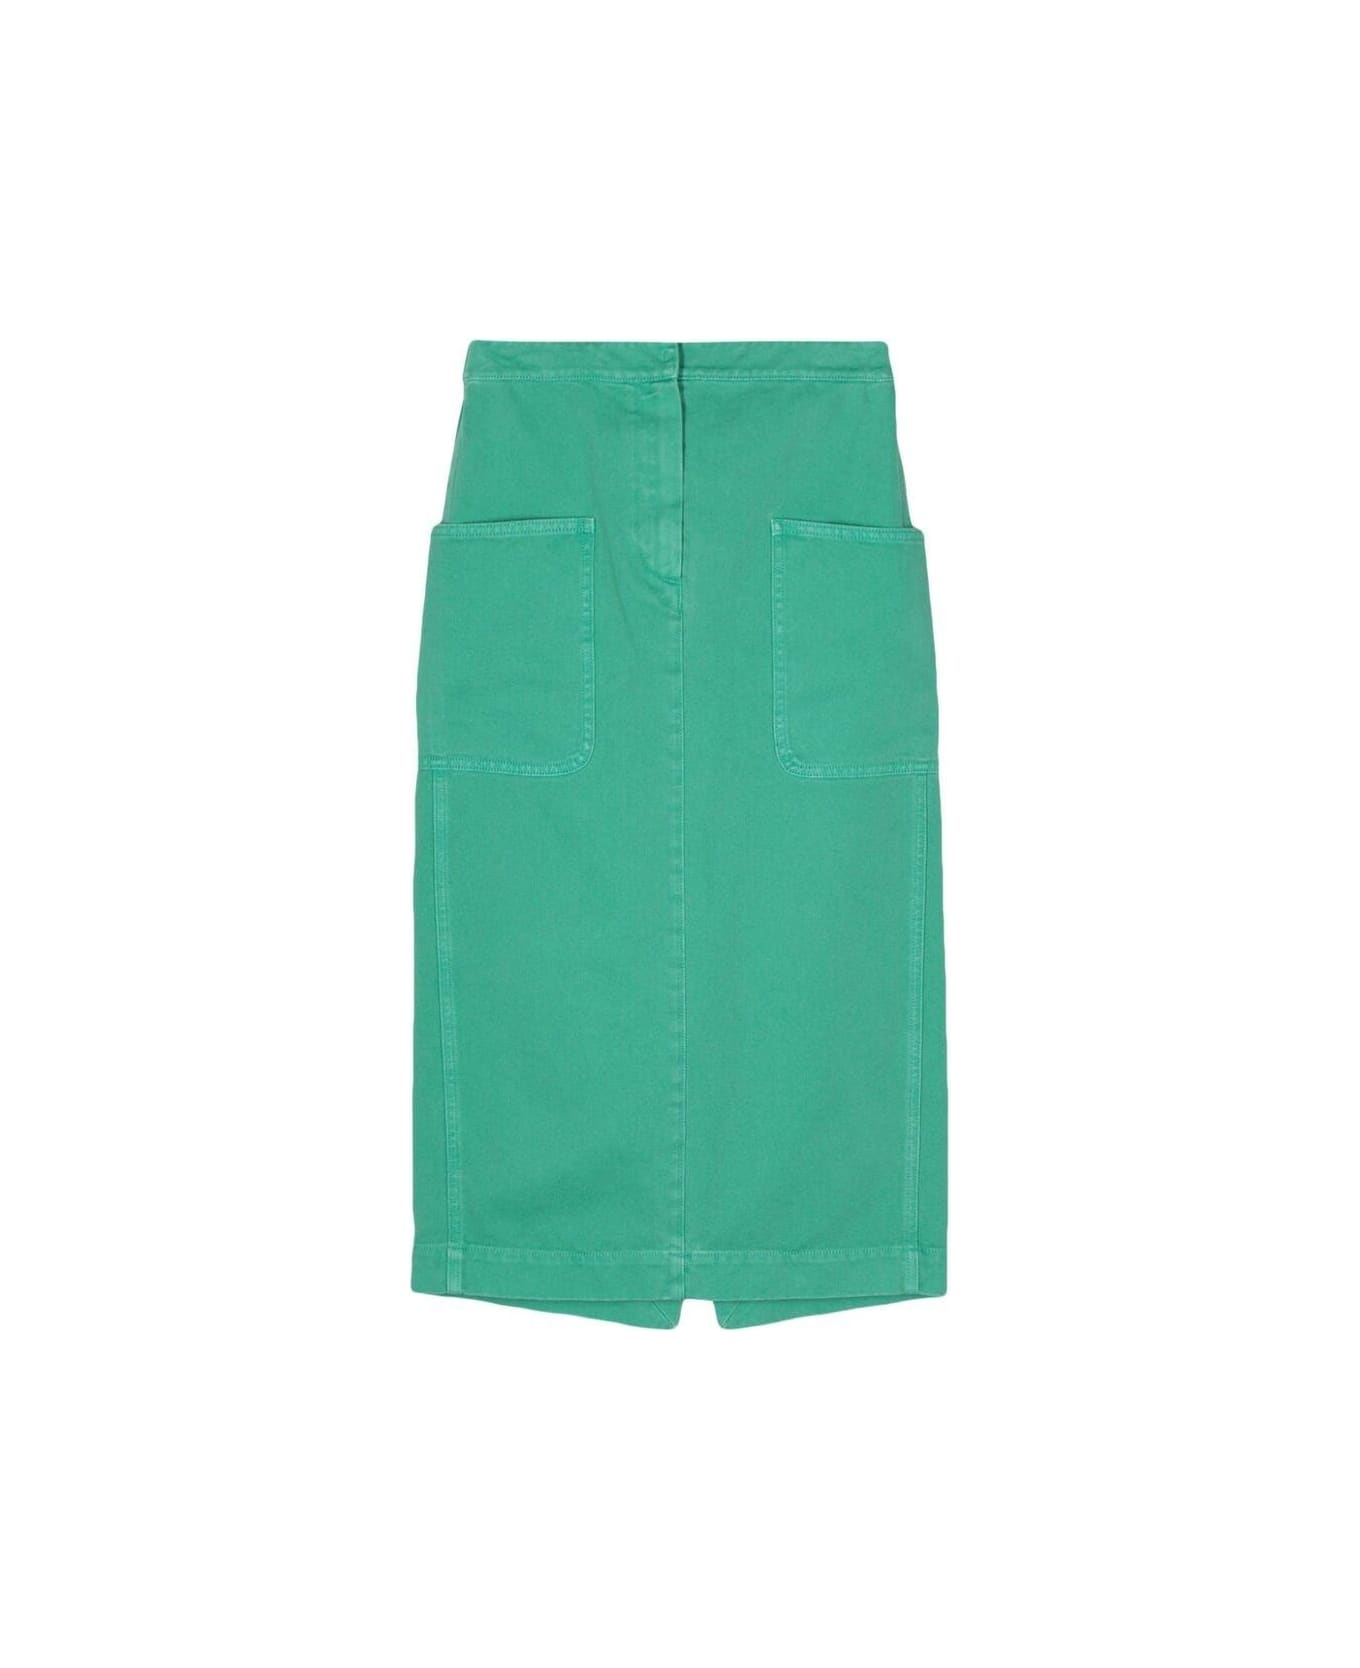 Max Mara Pocket Detailed Skirt